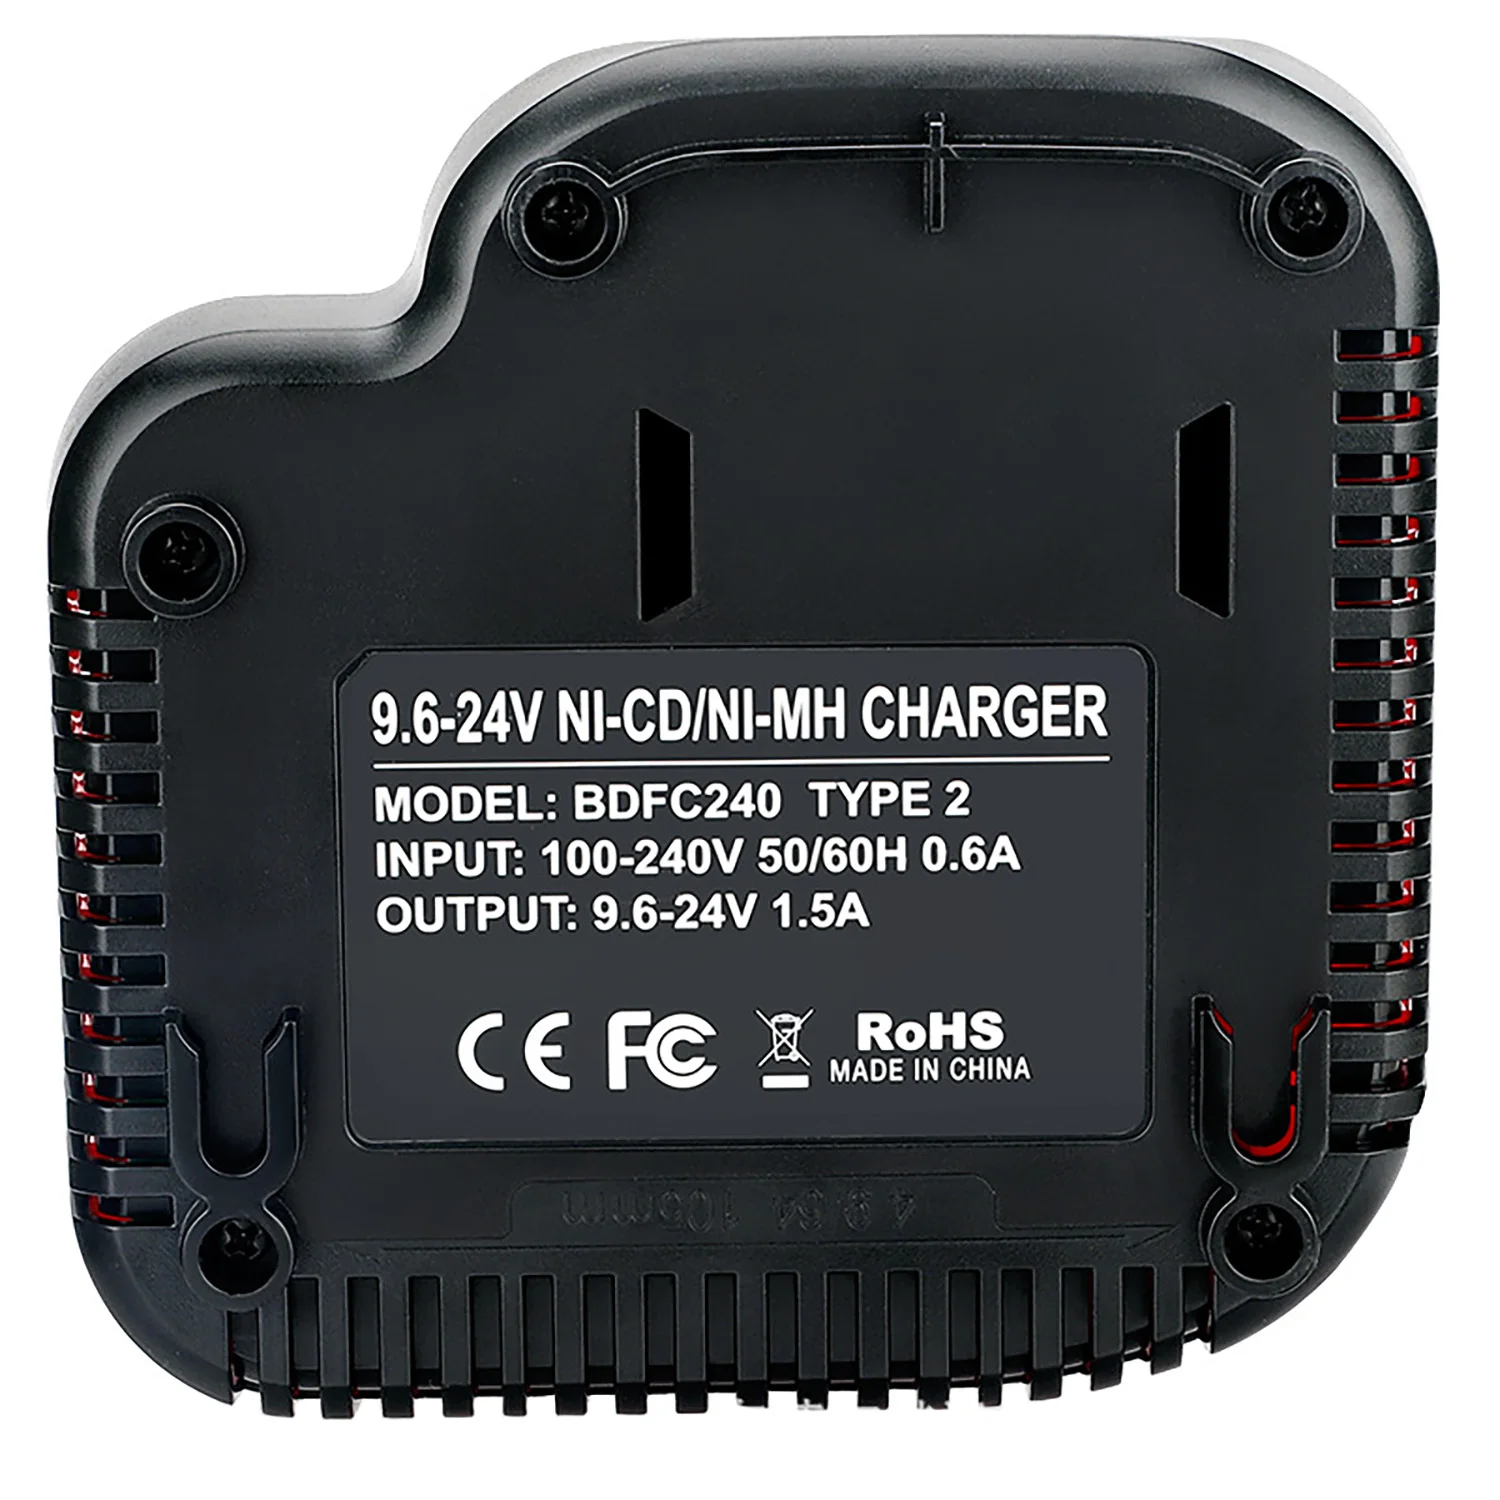 C&P BD Ch03 Used Charger FireStorm 9.6V - 24V FS240FC NicdNimh Battery